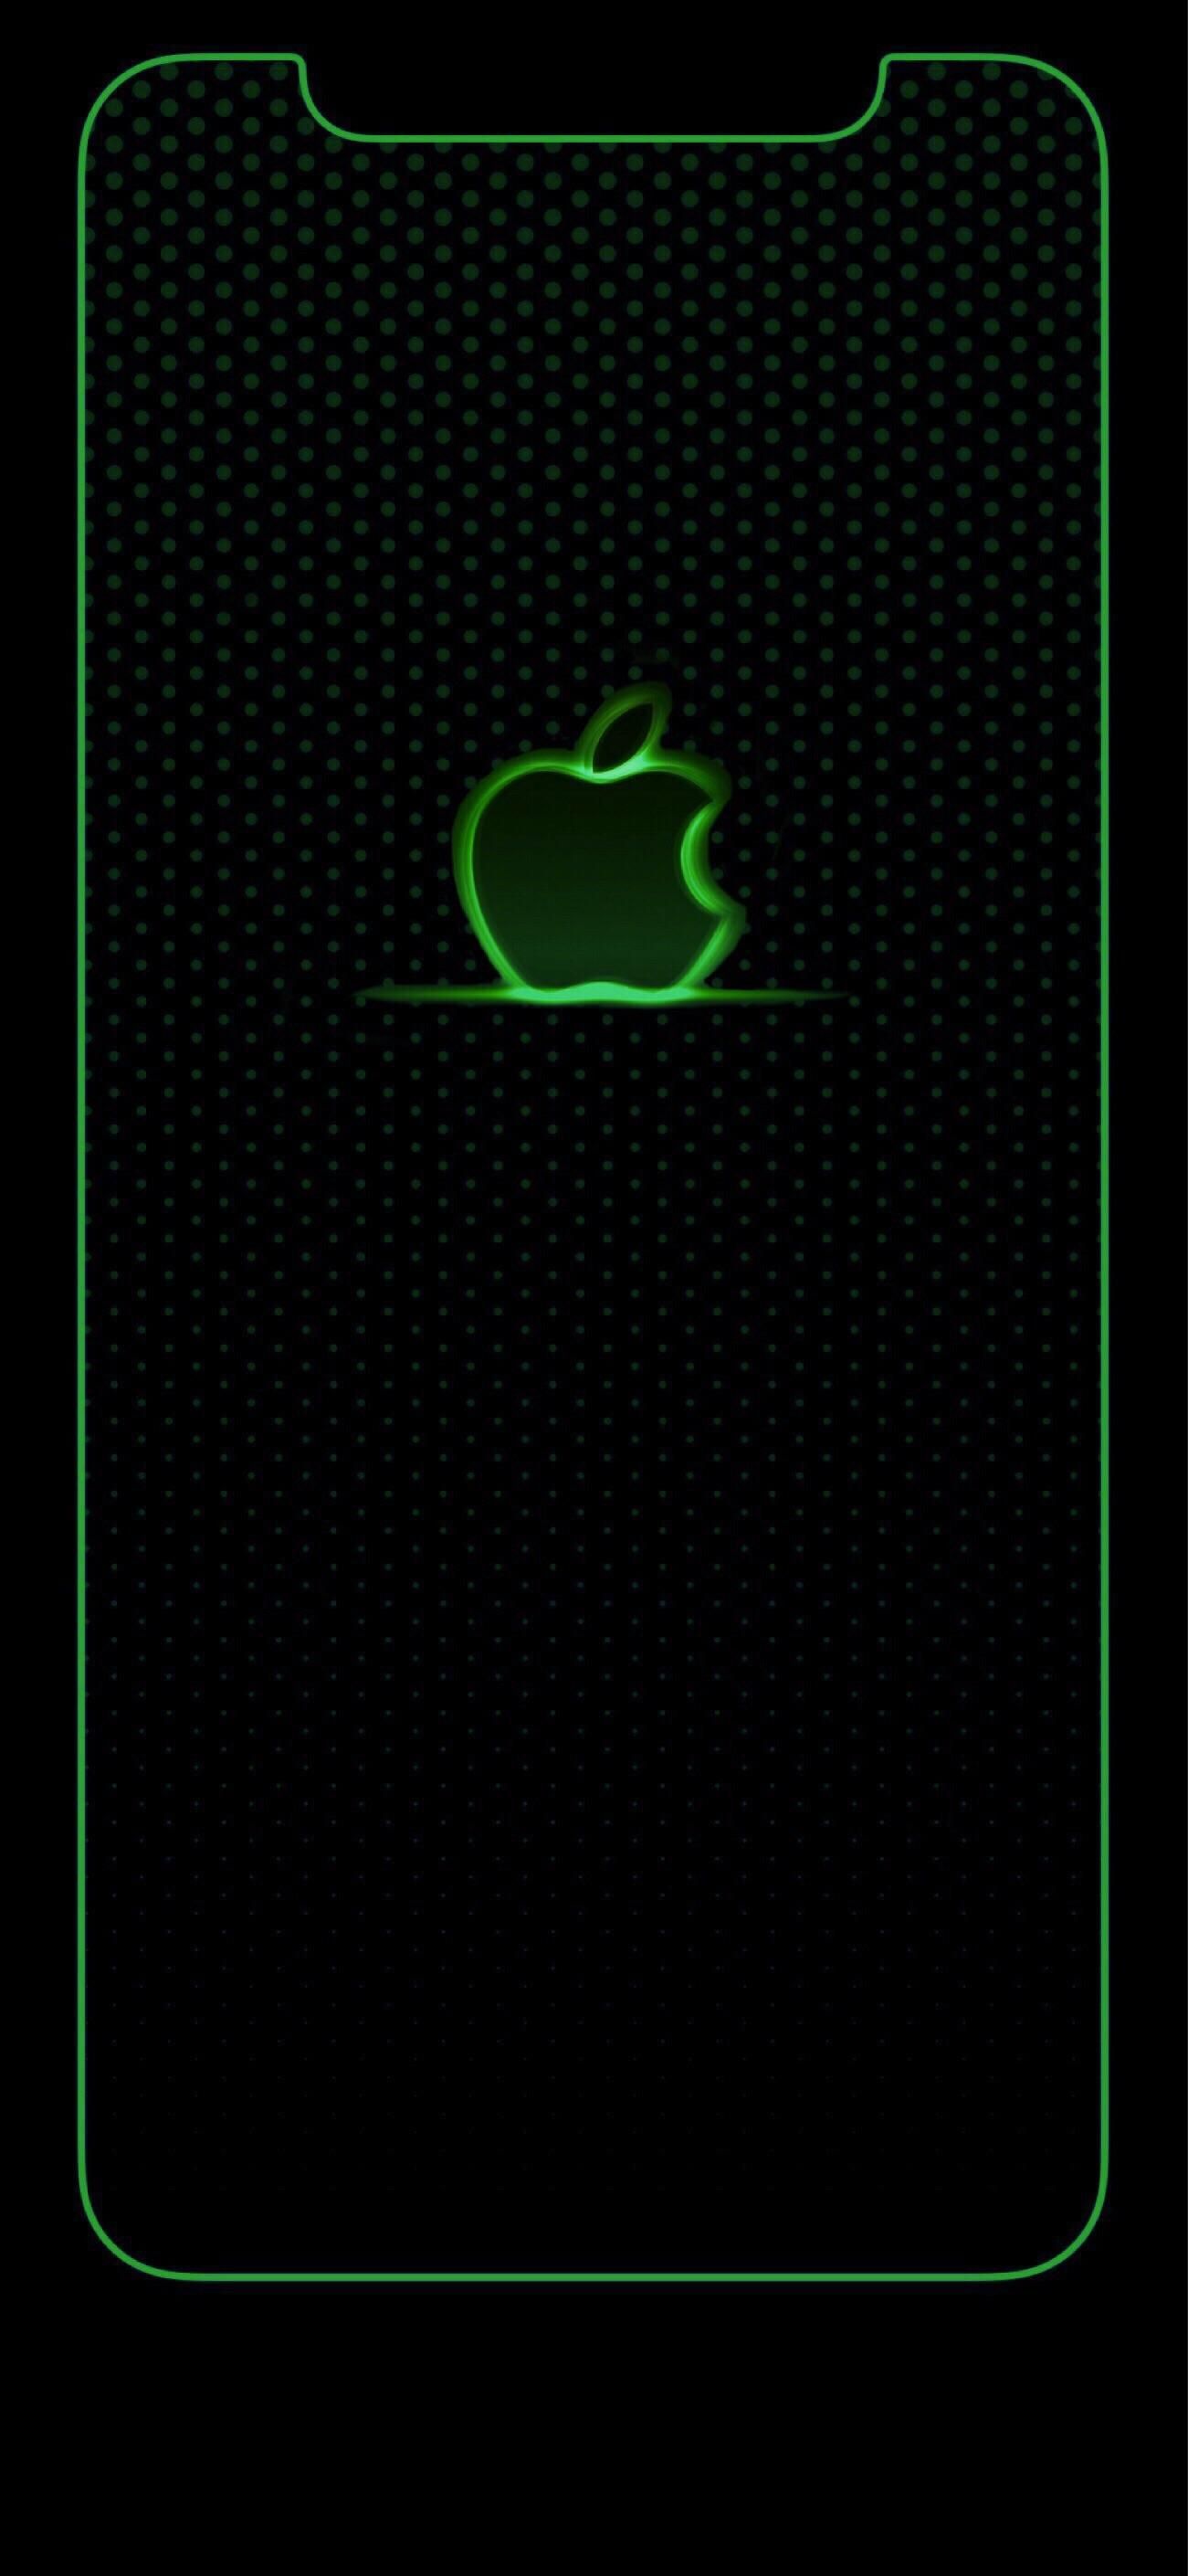 Apple logo wallpaper iphone, Apple .at